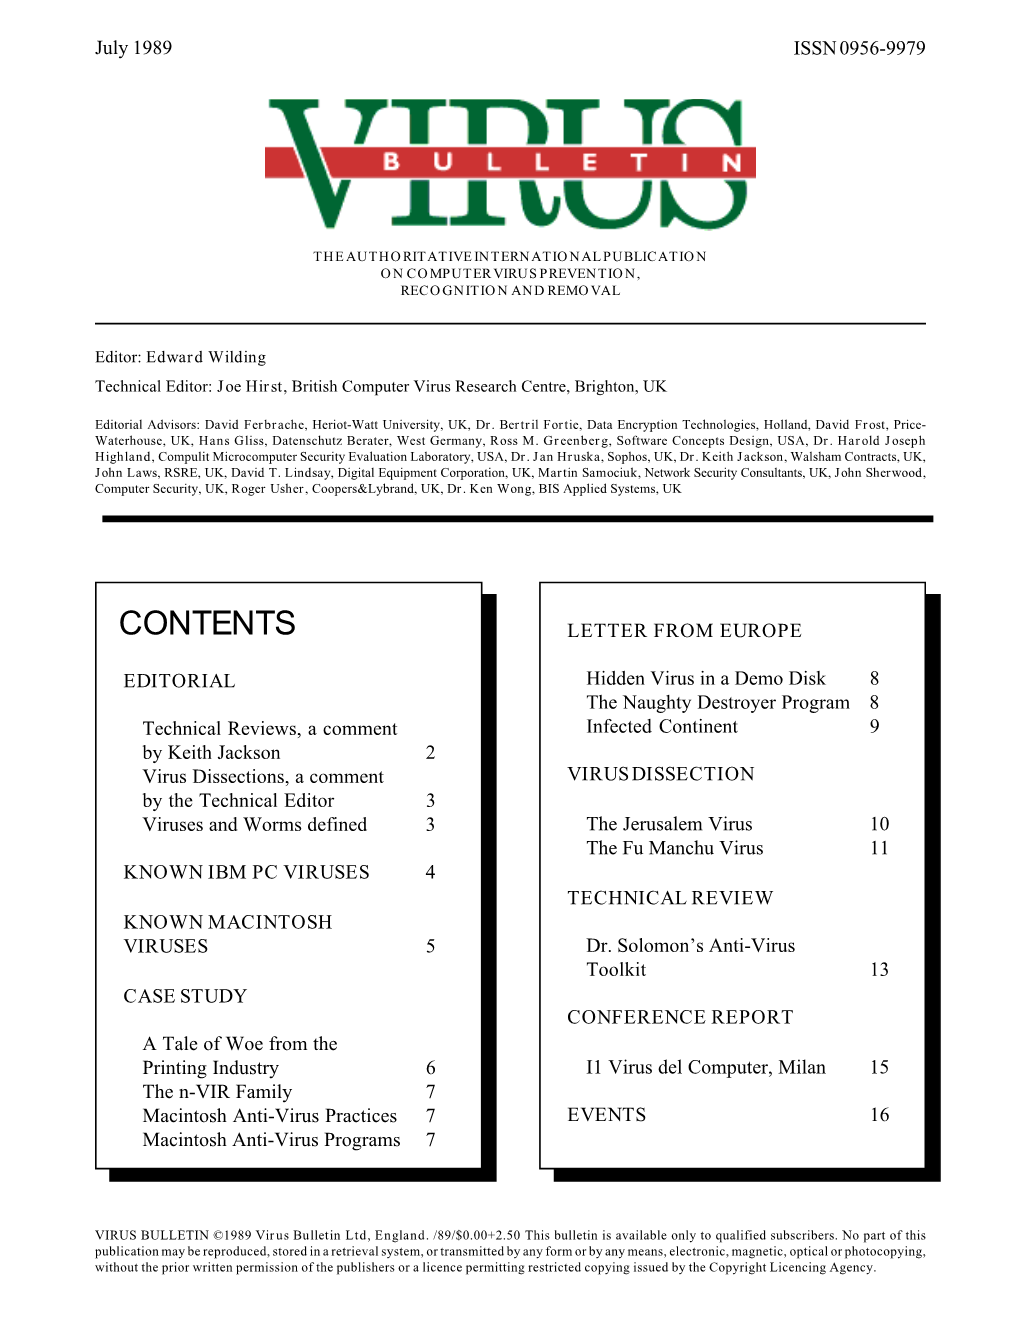 Virus Bulletin, July 1989